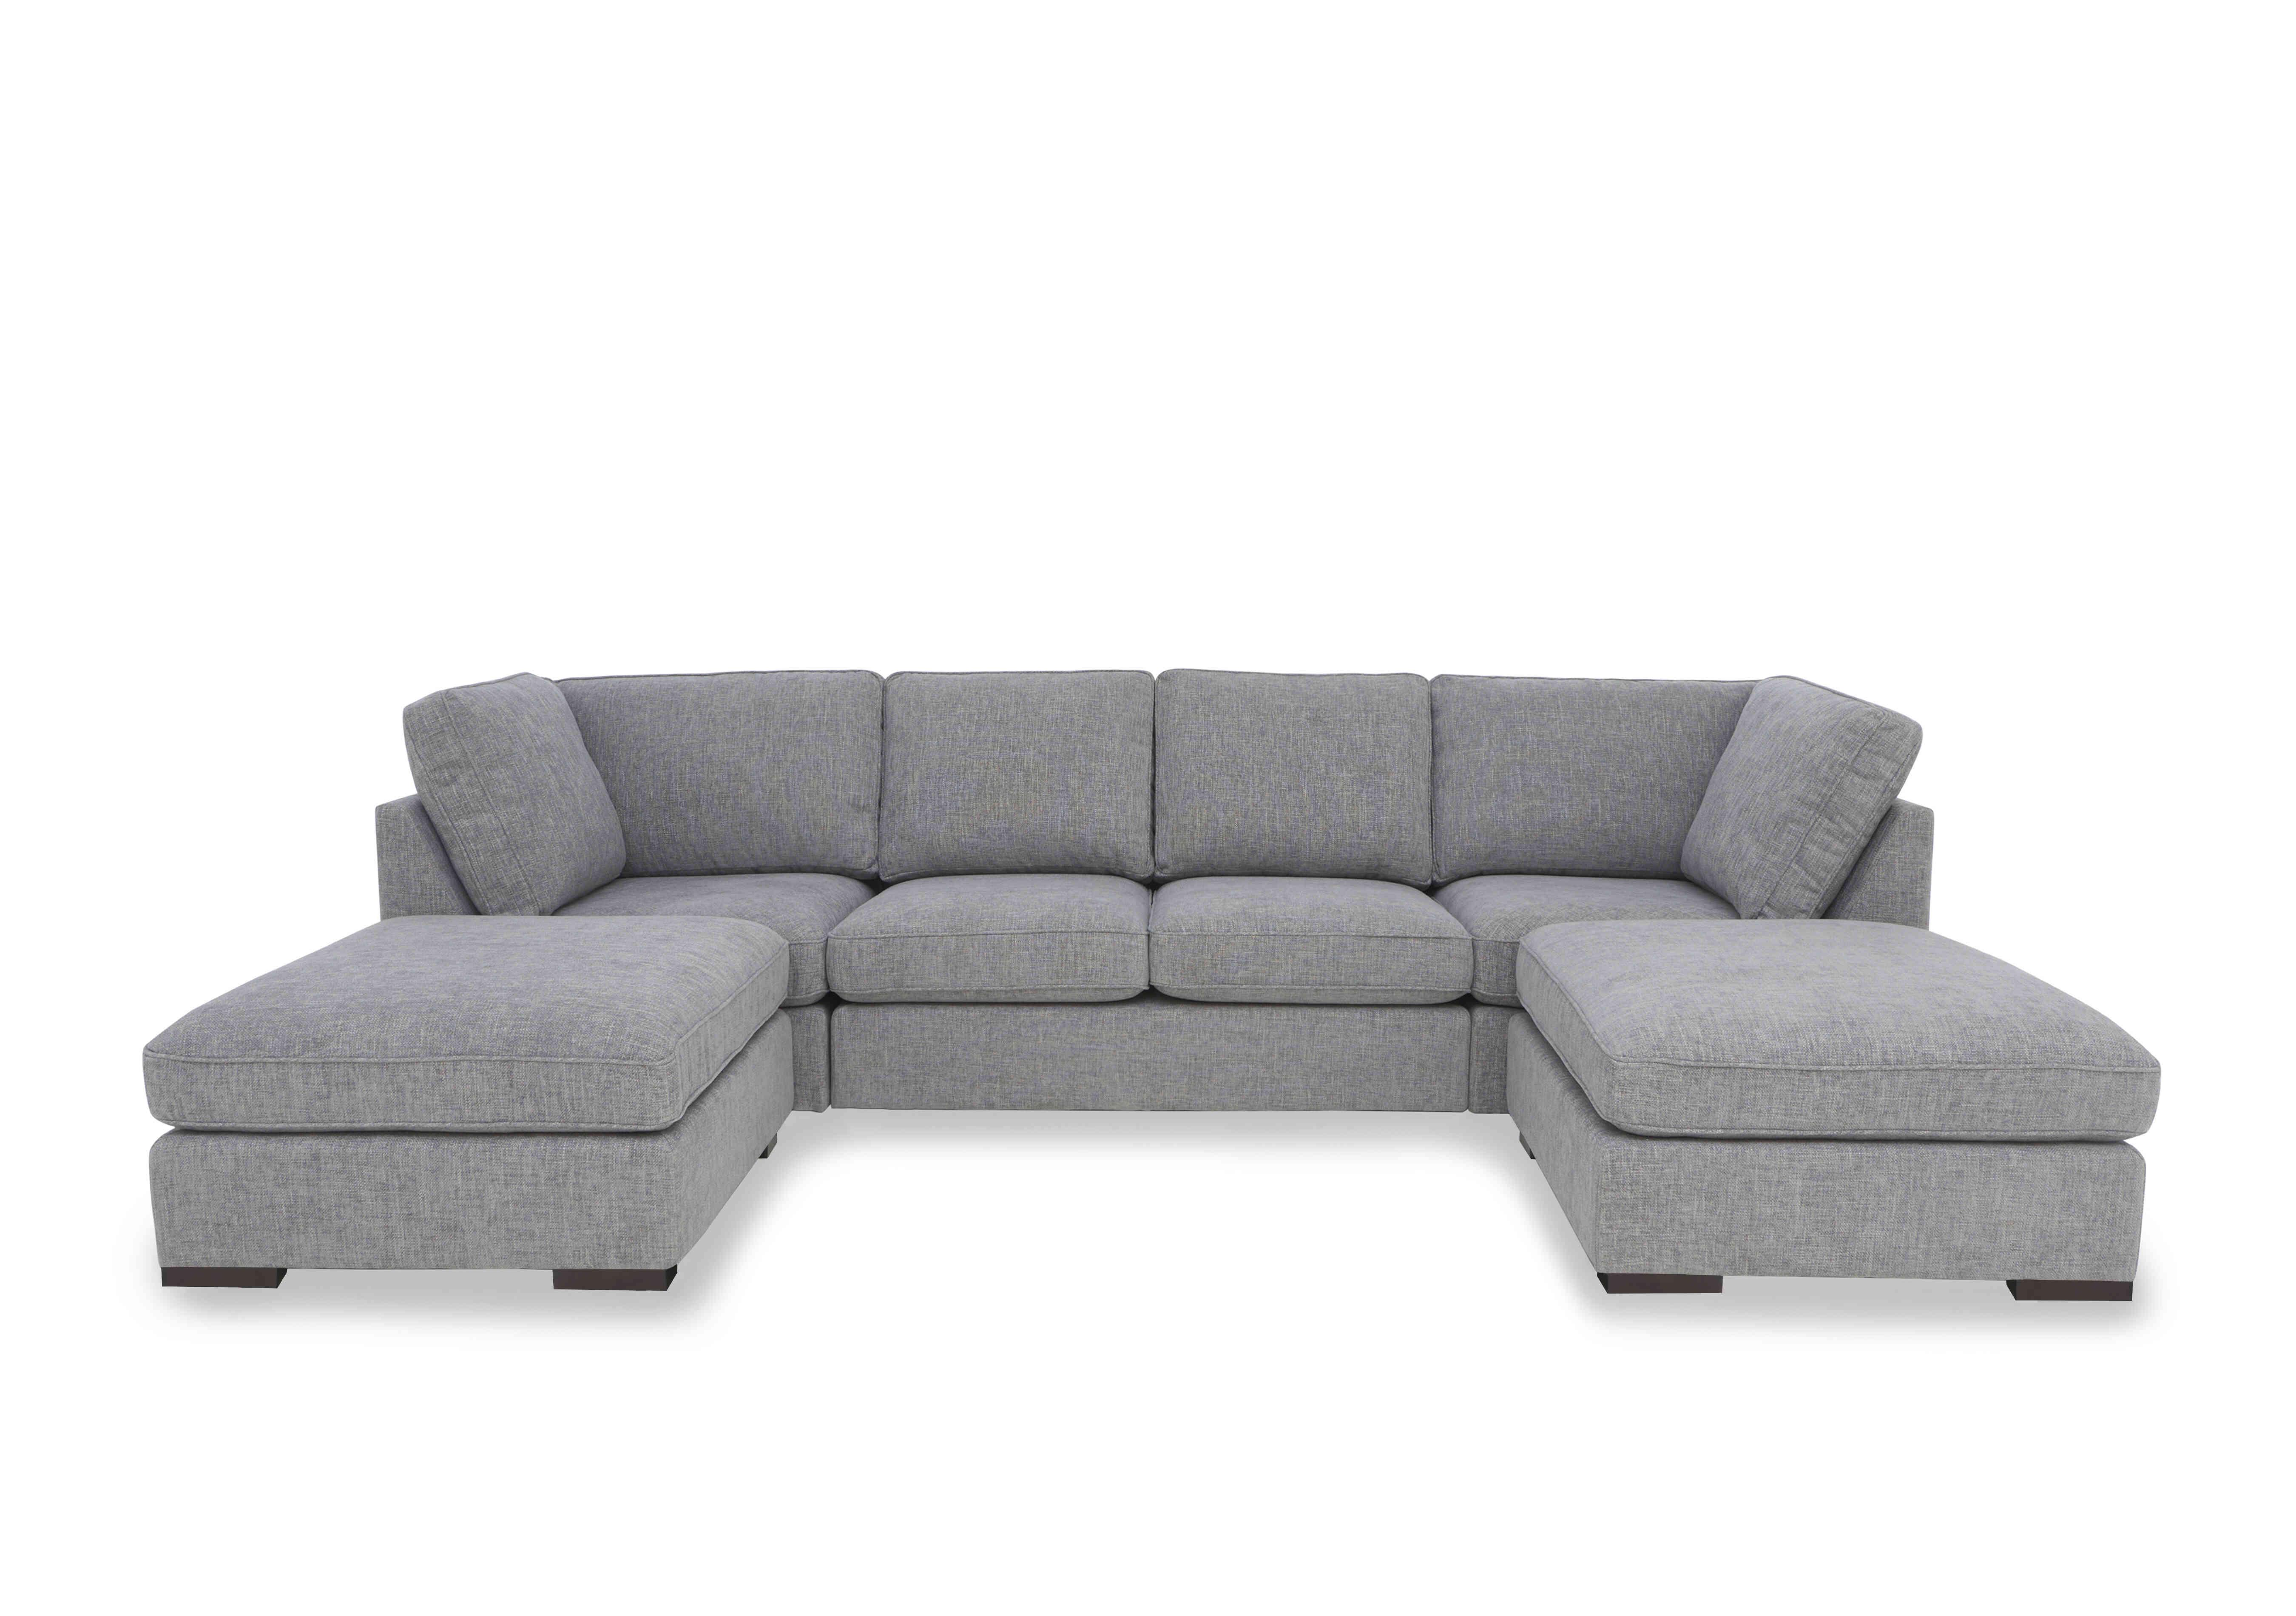 Ugo Large U-Shaped Corner Sofa in Anivia Grey 12445 on Furniture Village